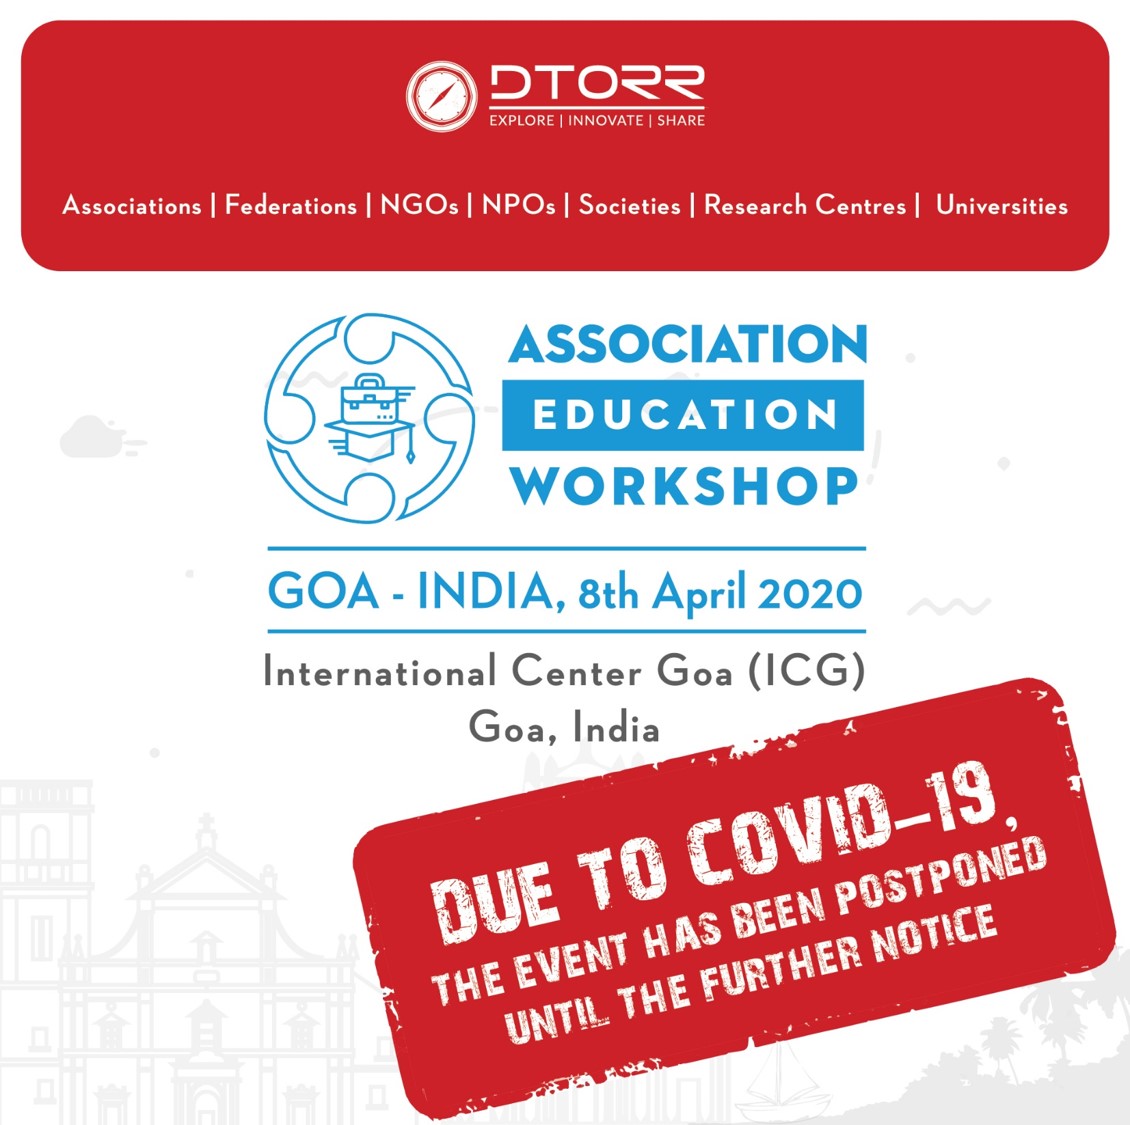 Association Education Workshop - 2020